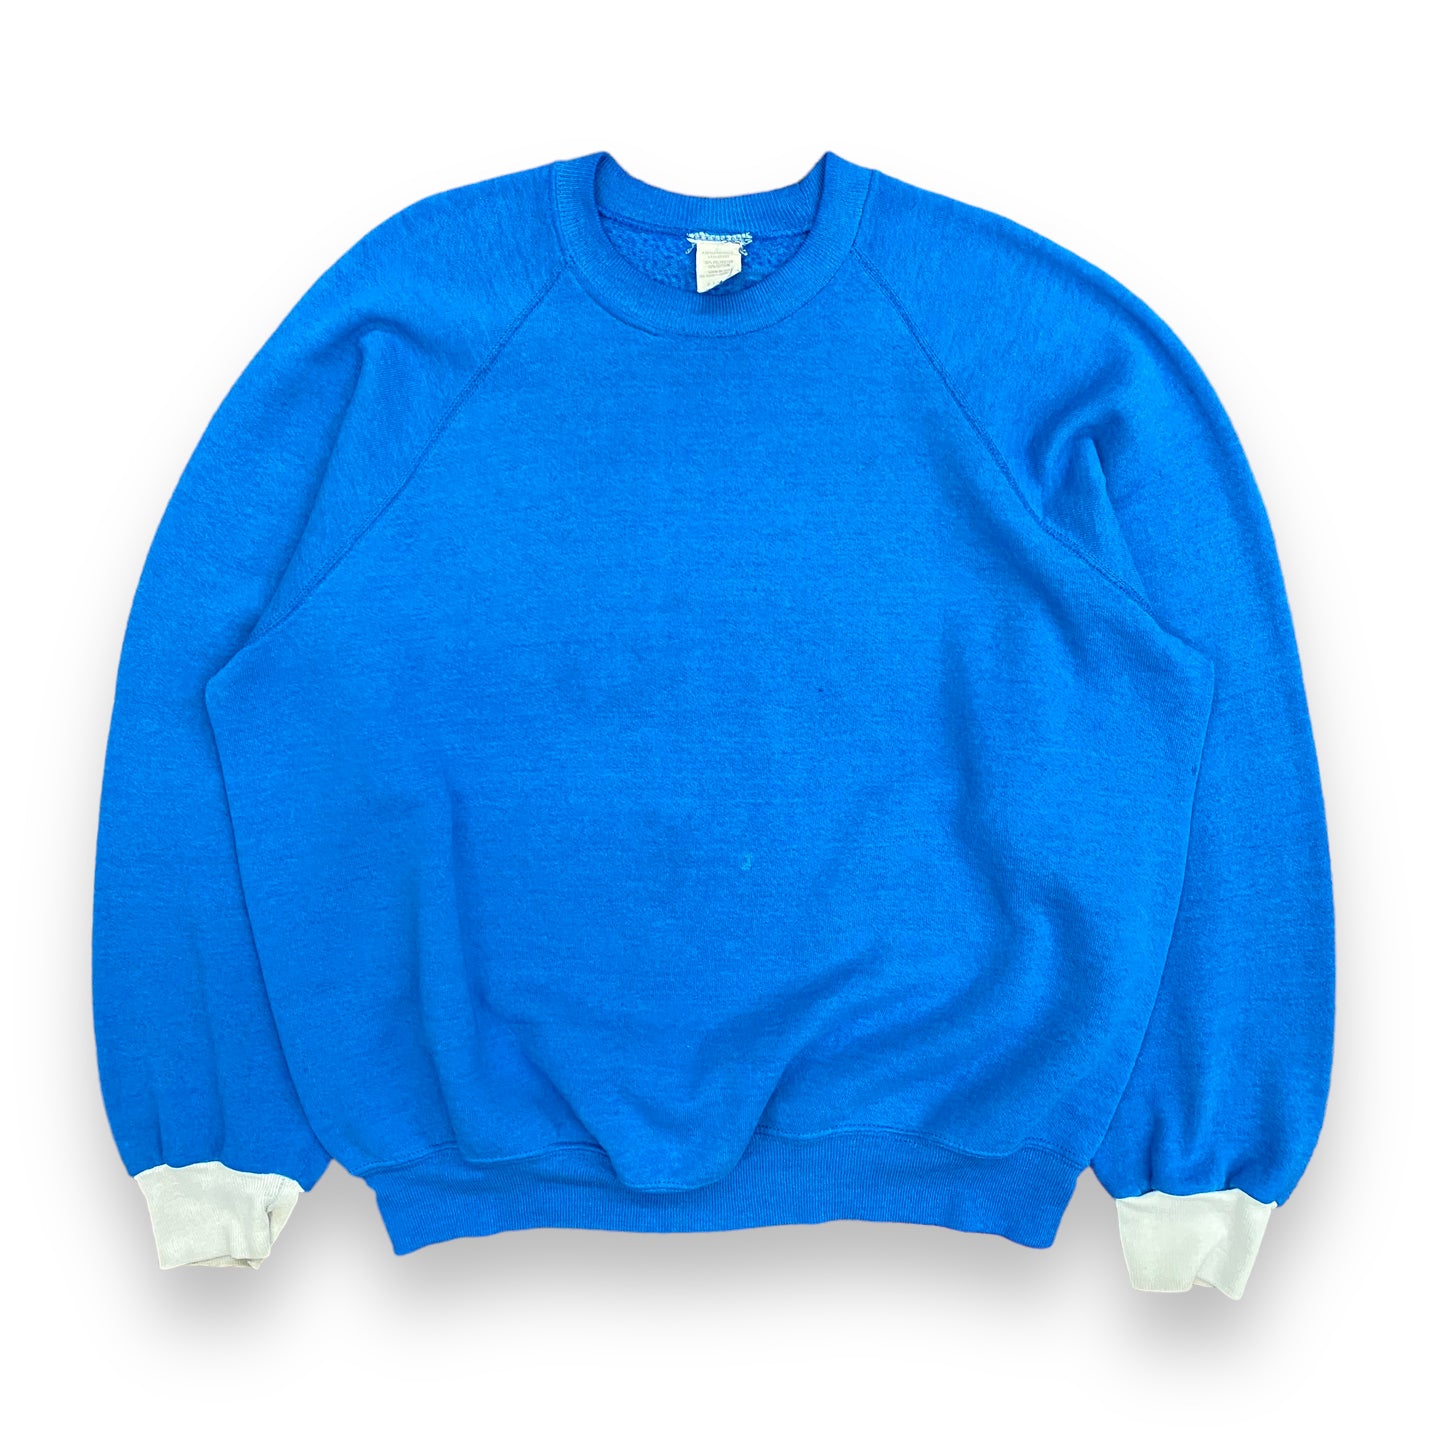 Vintage 1980s Blue Raglan Sweatshirt - Size XL